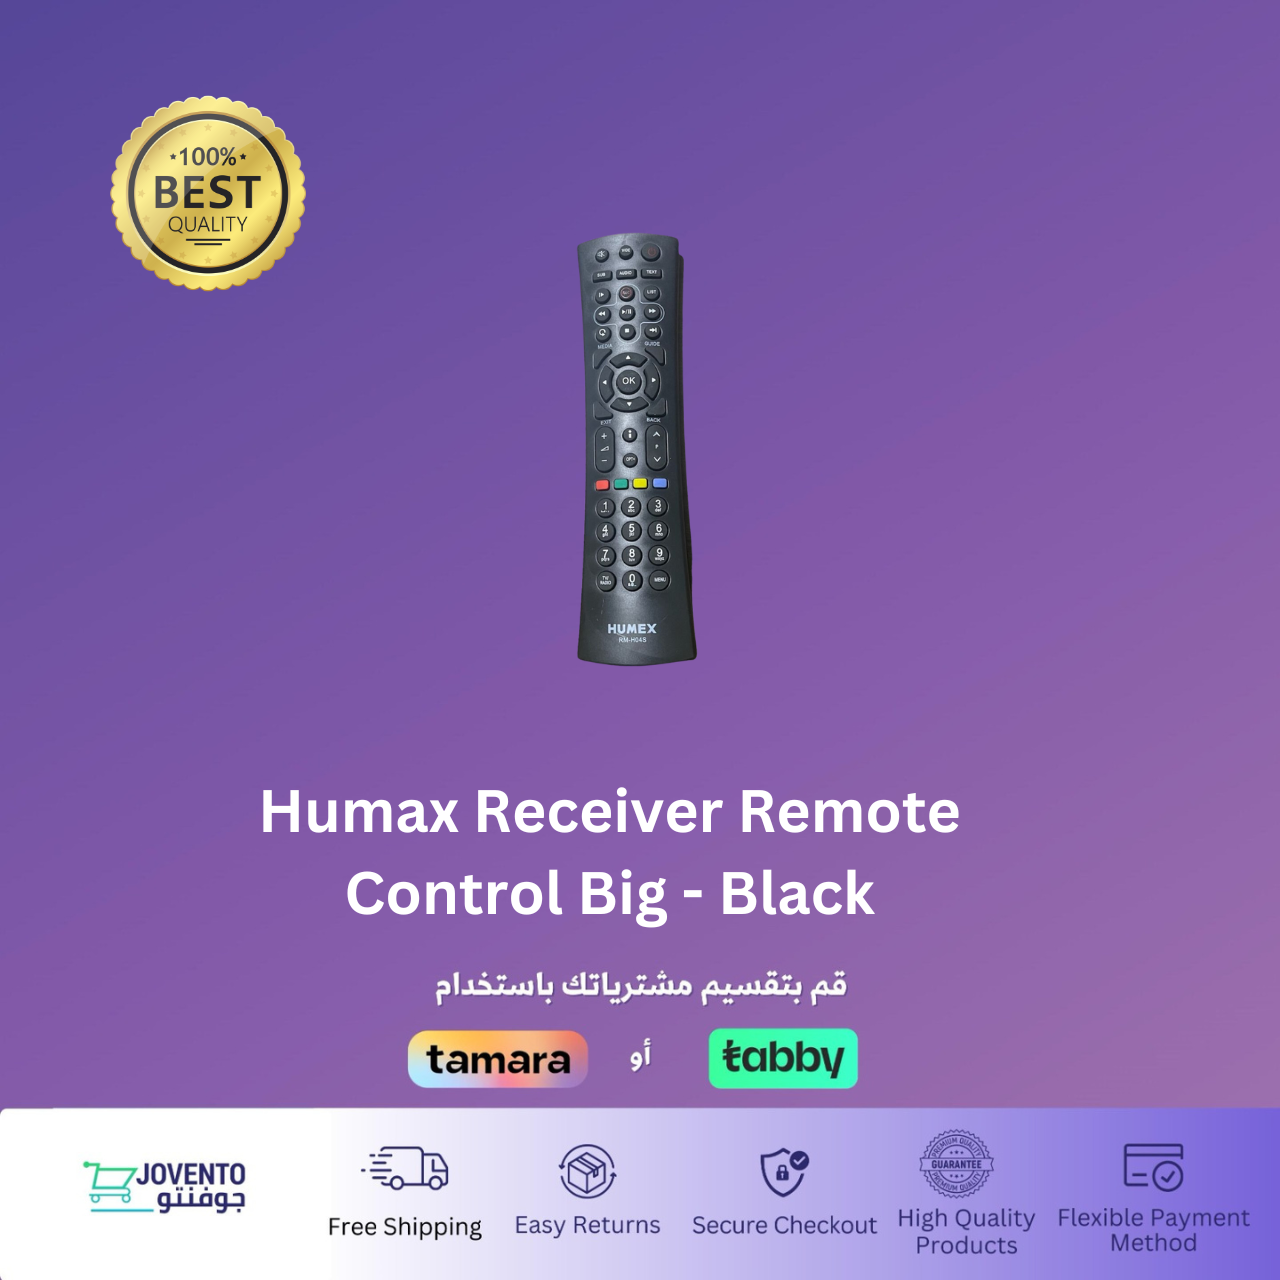 Humax Receiver Remote Control Big - Black